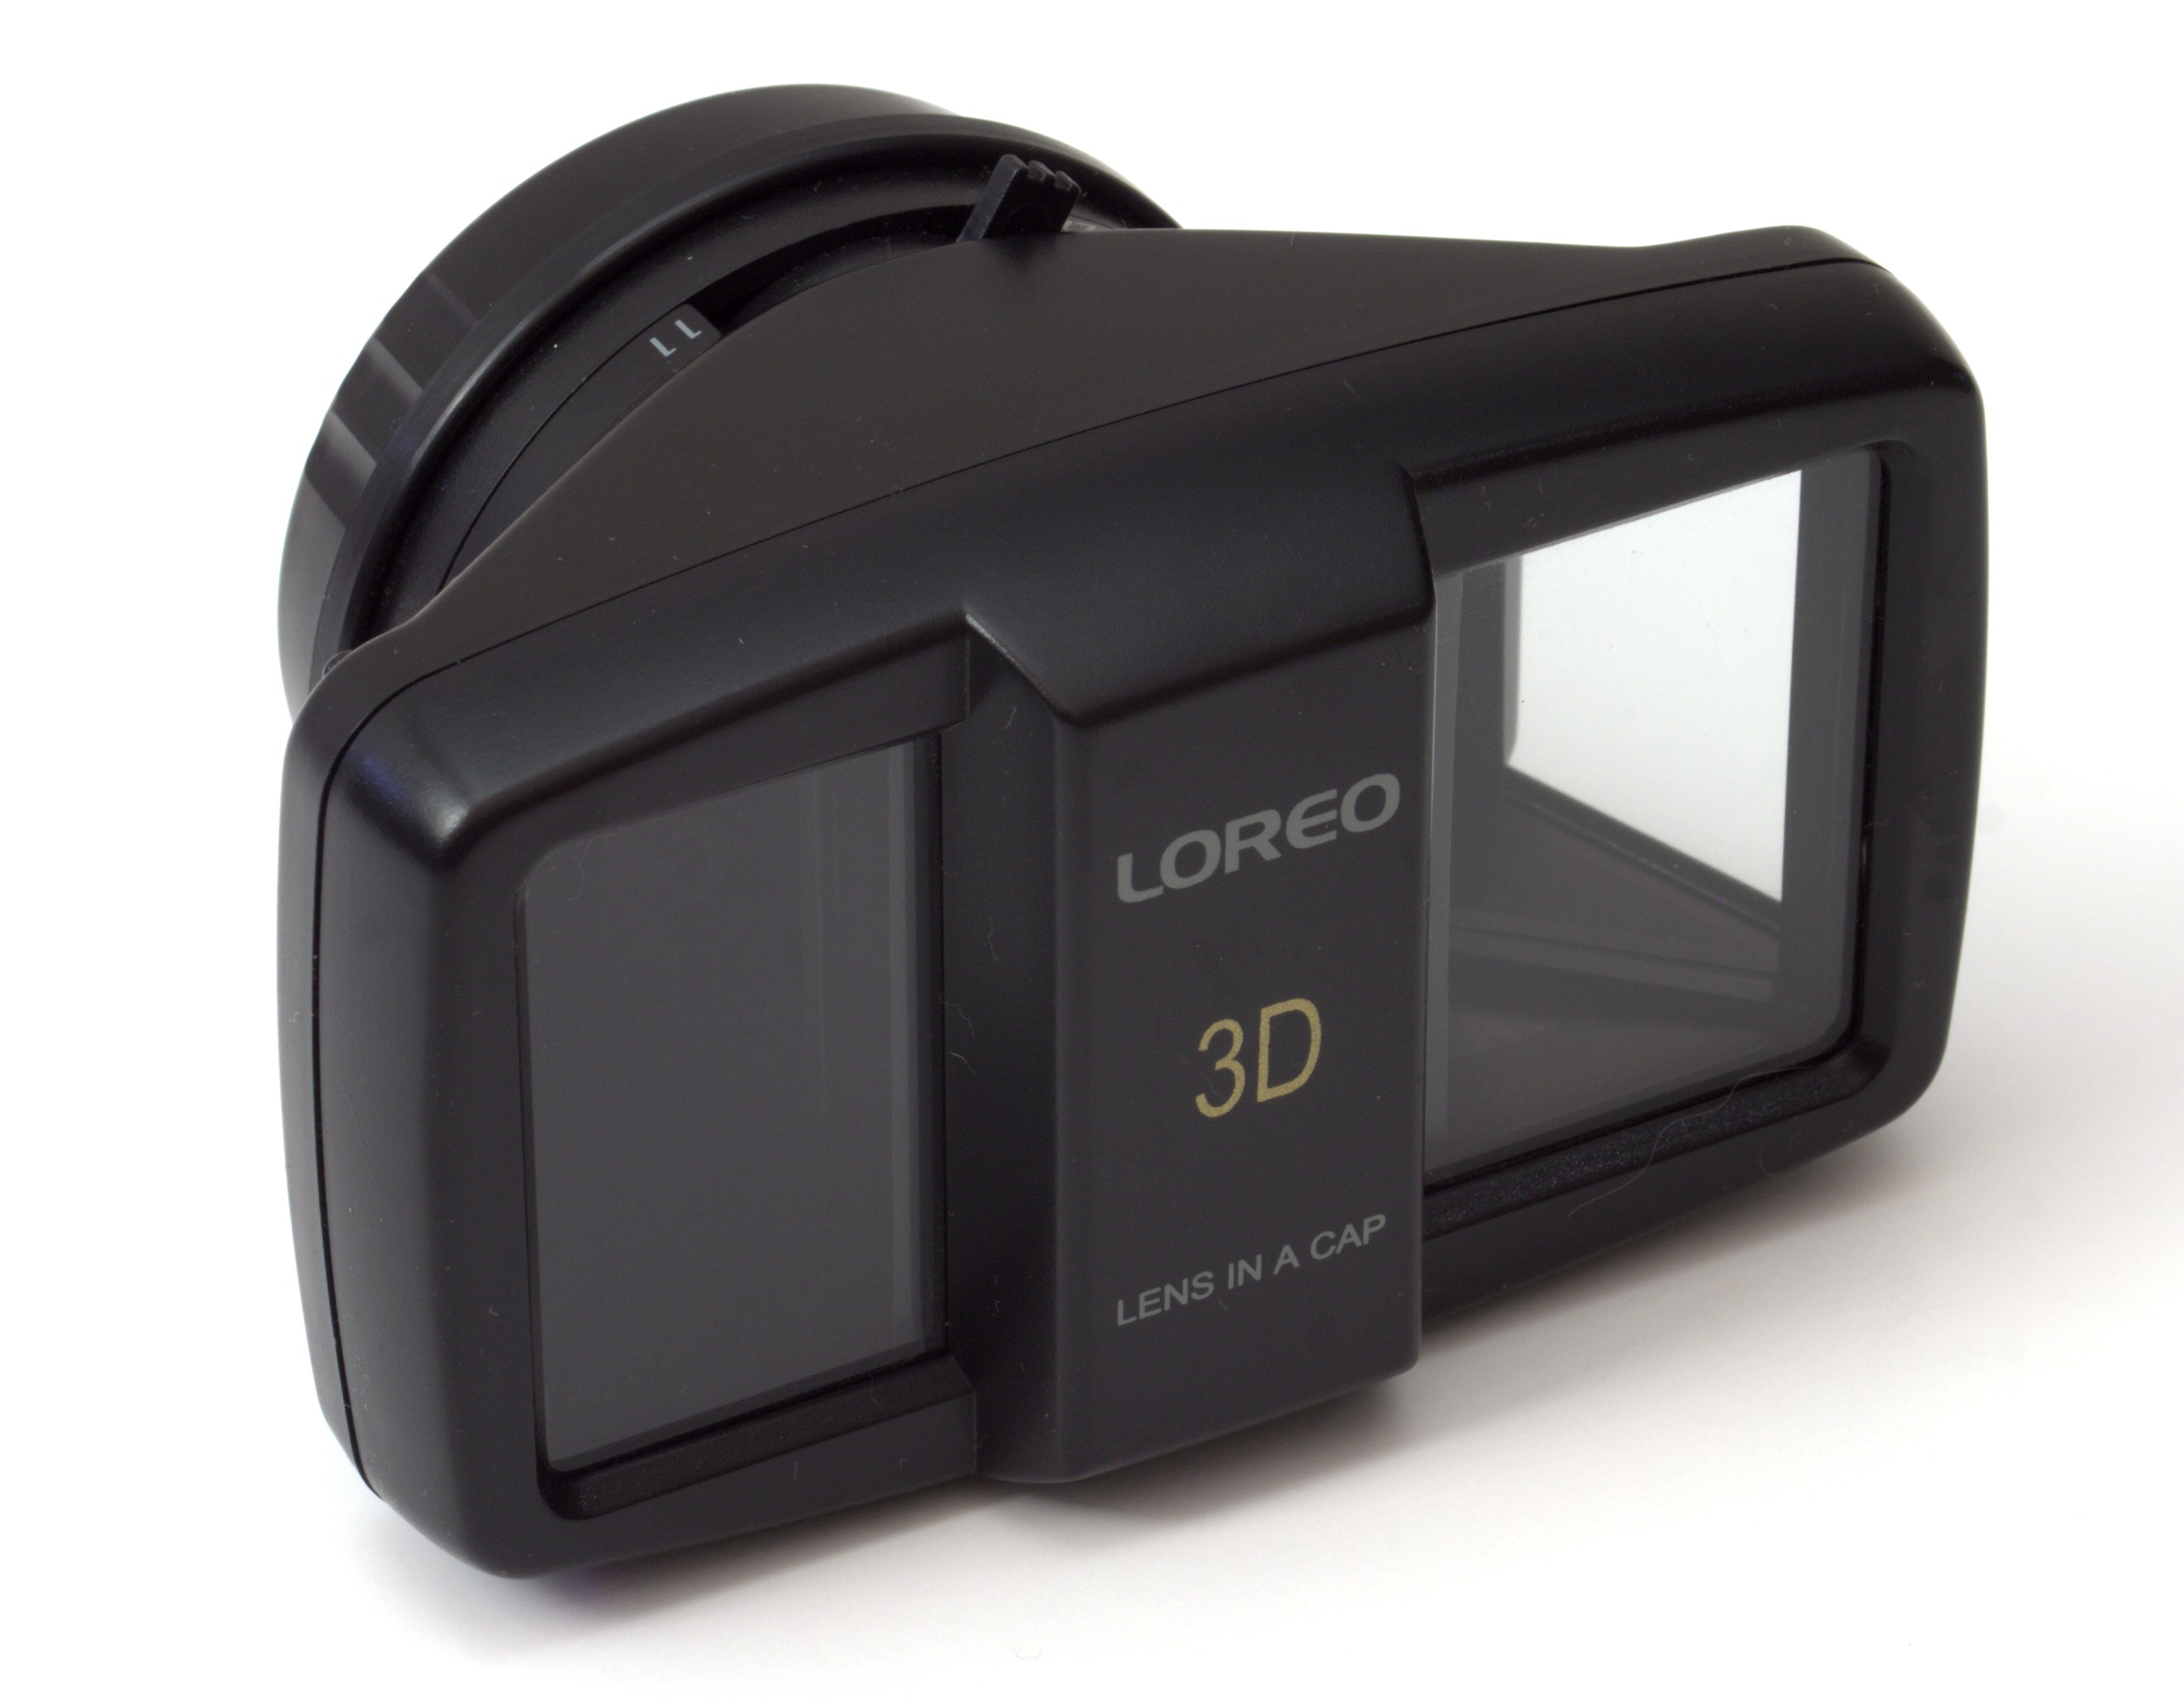 Loreo 3D lens